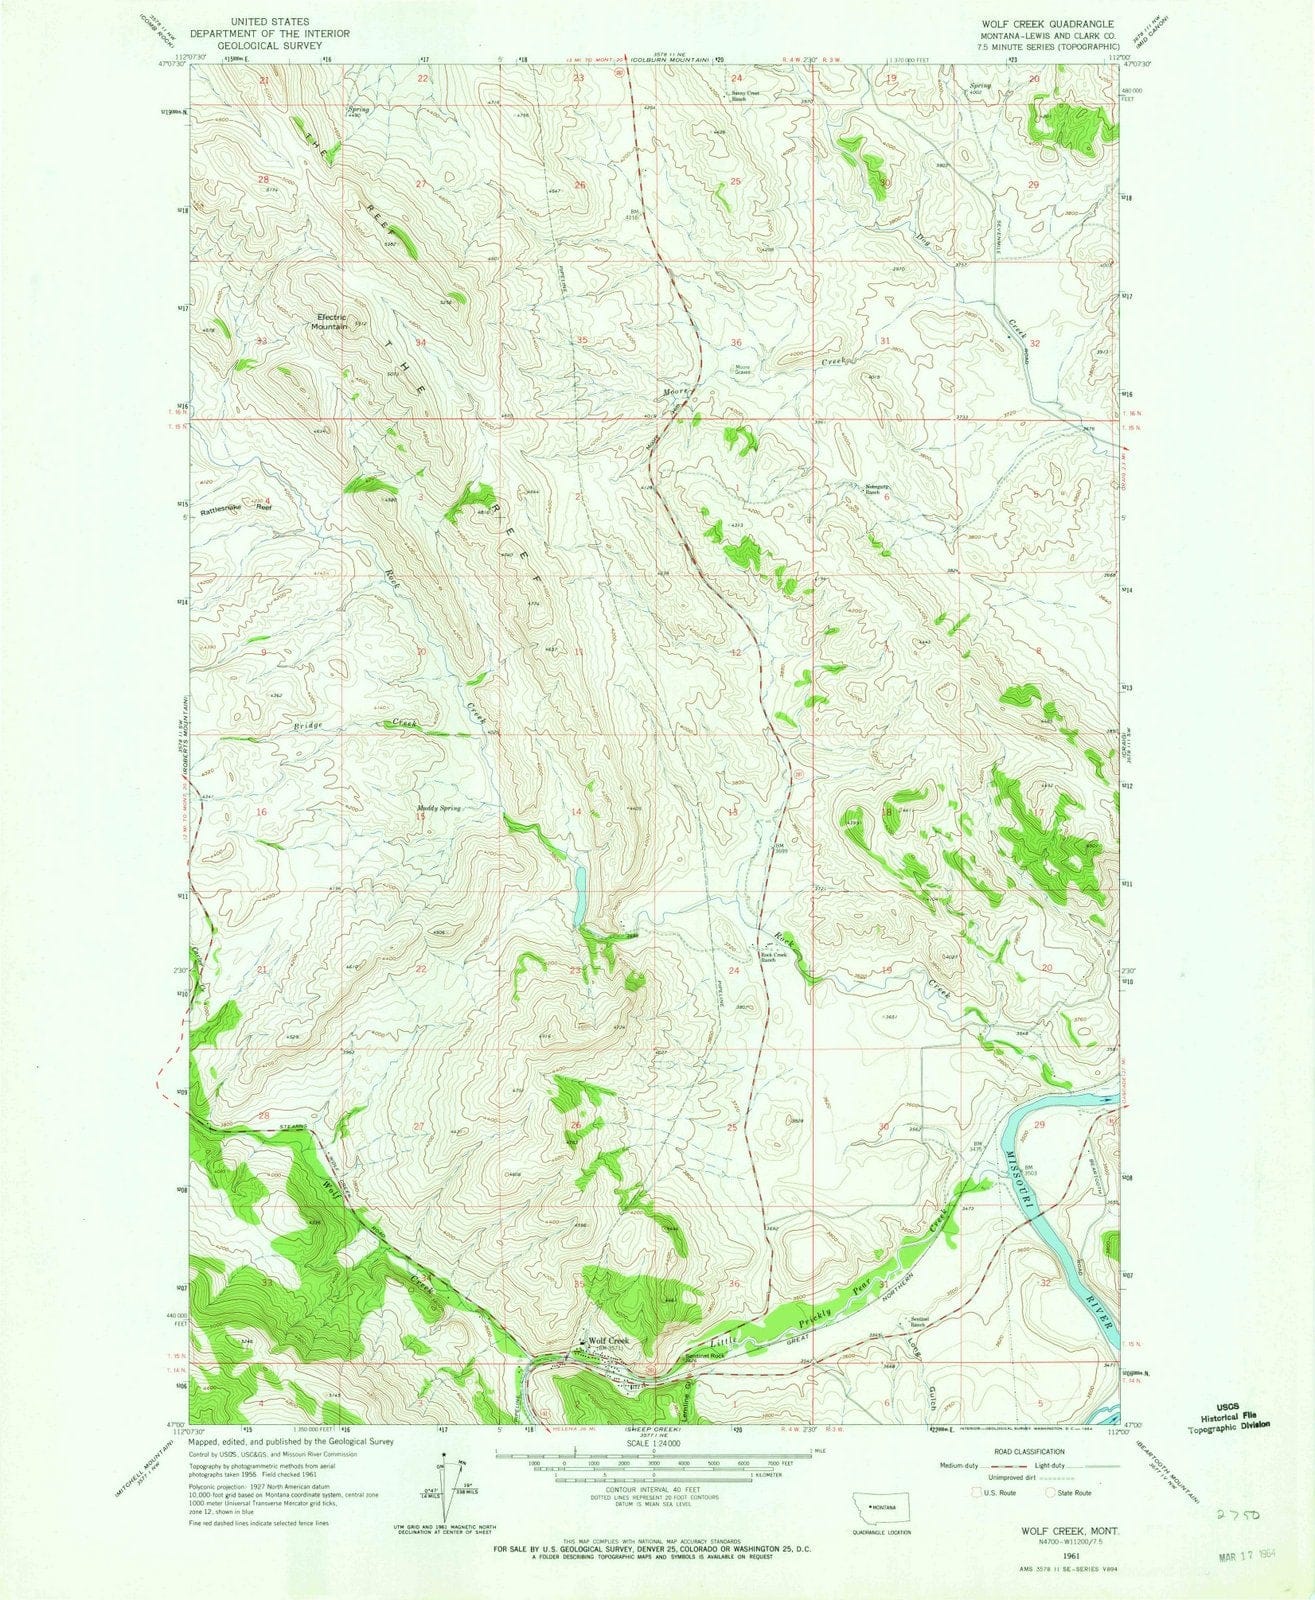 1961 Wolf Creek, MT - Montana - USGS Topographic Map - Historic Pictoric